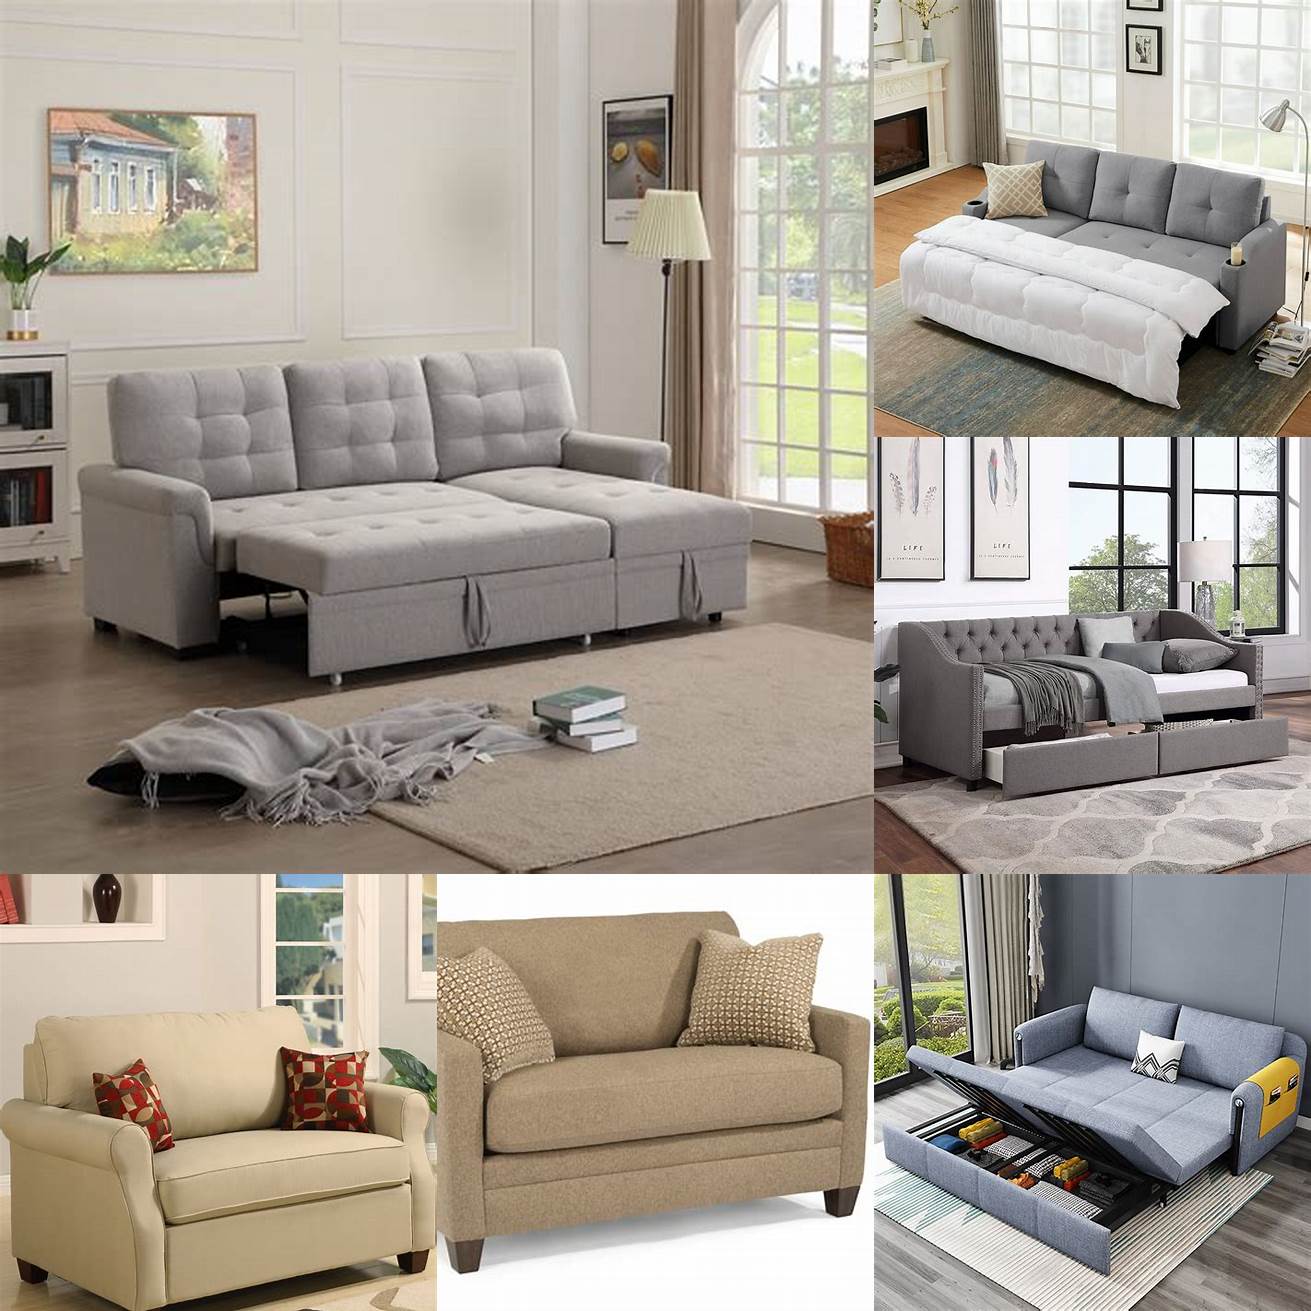 Image of a twin sleeper sofa with storage